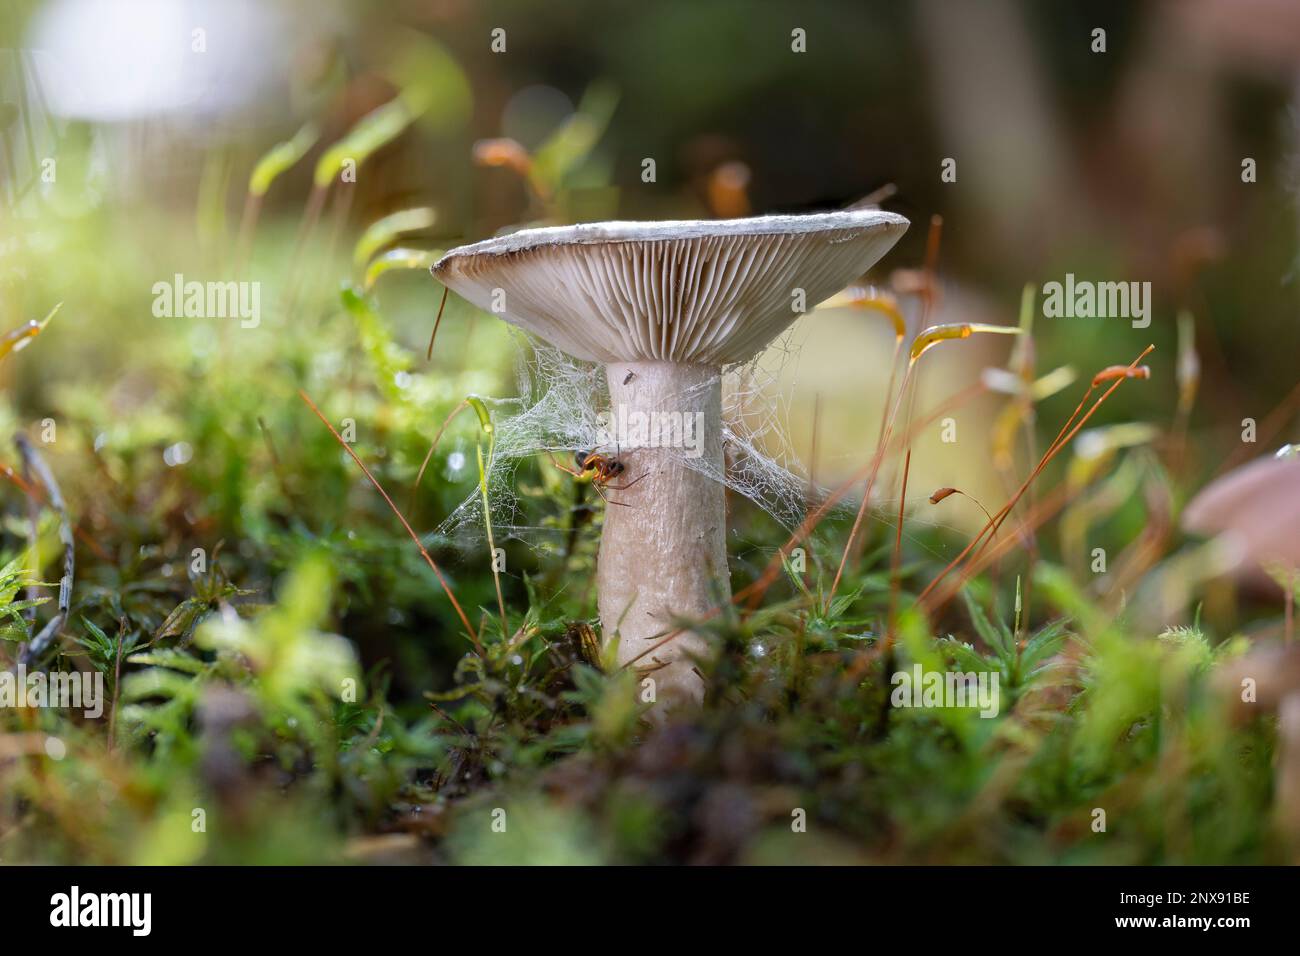 A closeup of a slimy milkcap mushroom (Lactarius blennius). Stock Photo